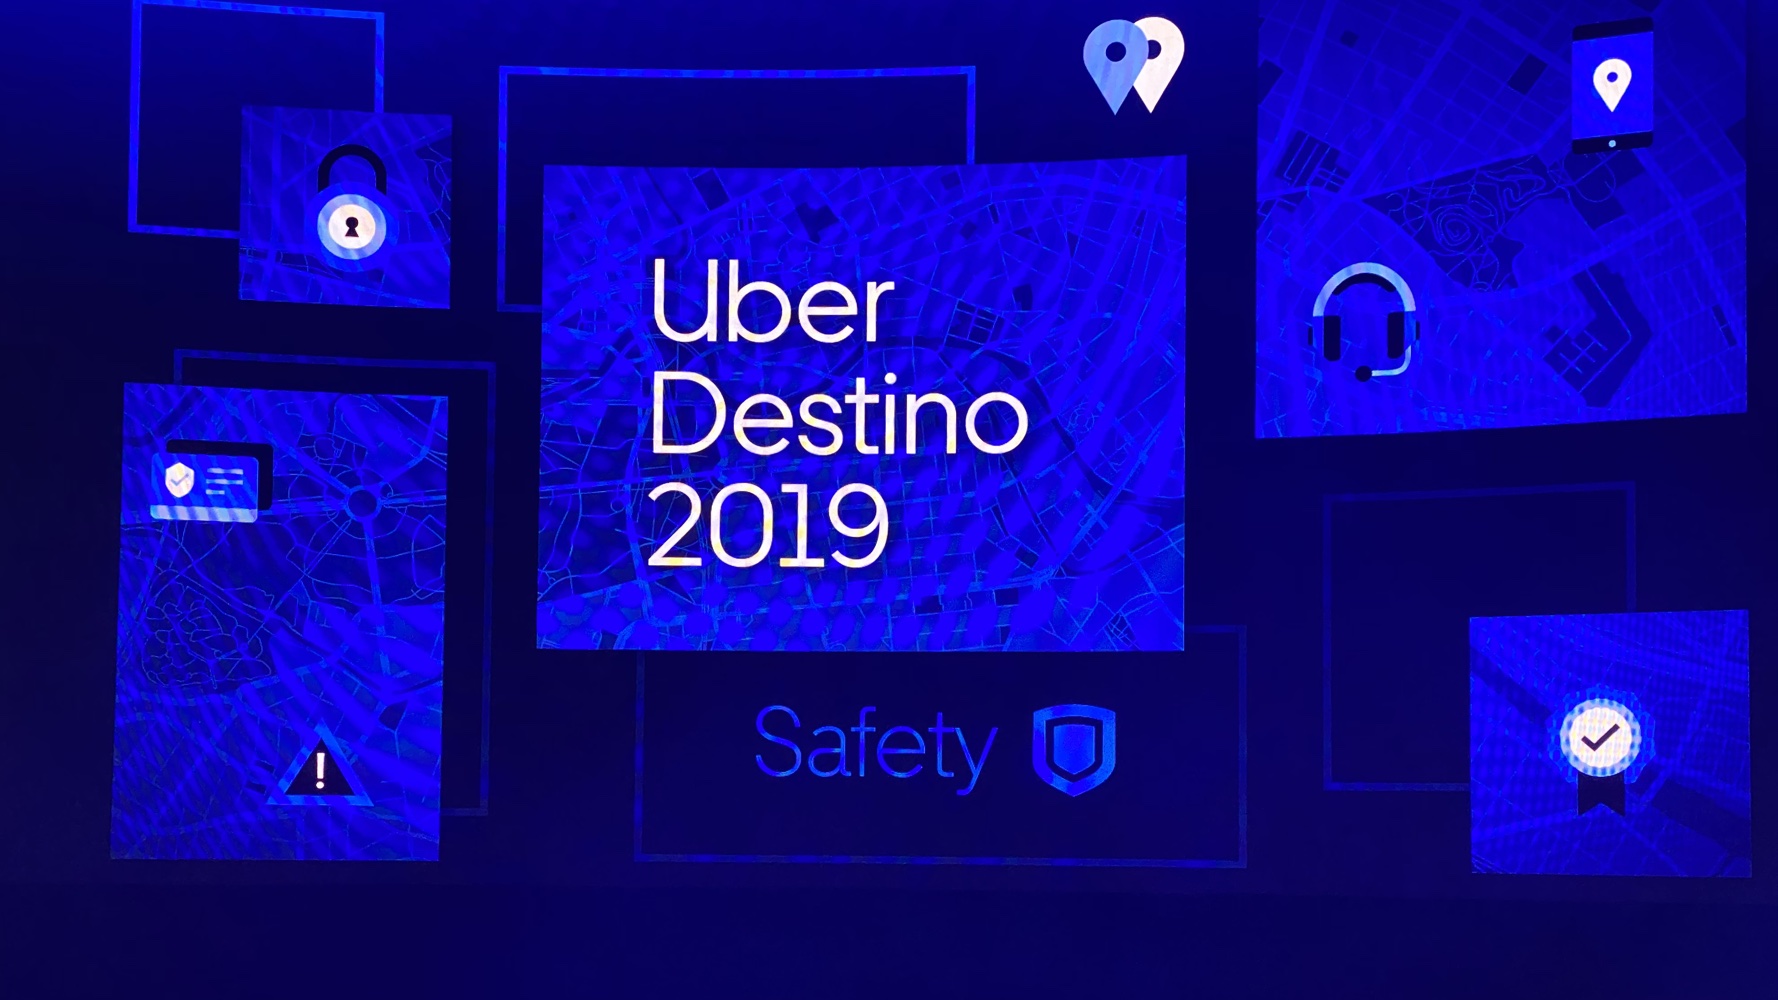 Uber Destino 2019